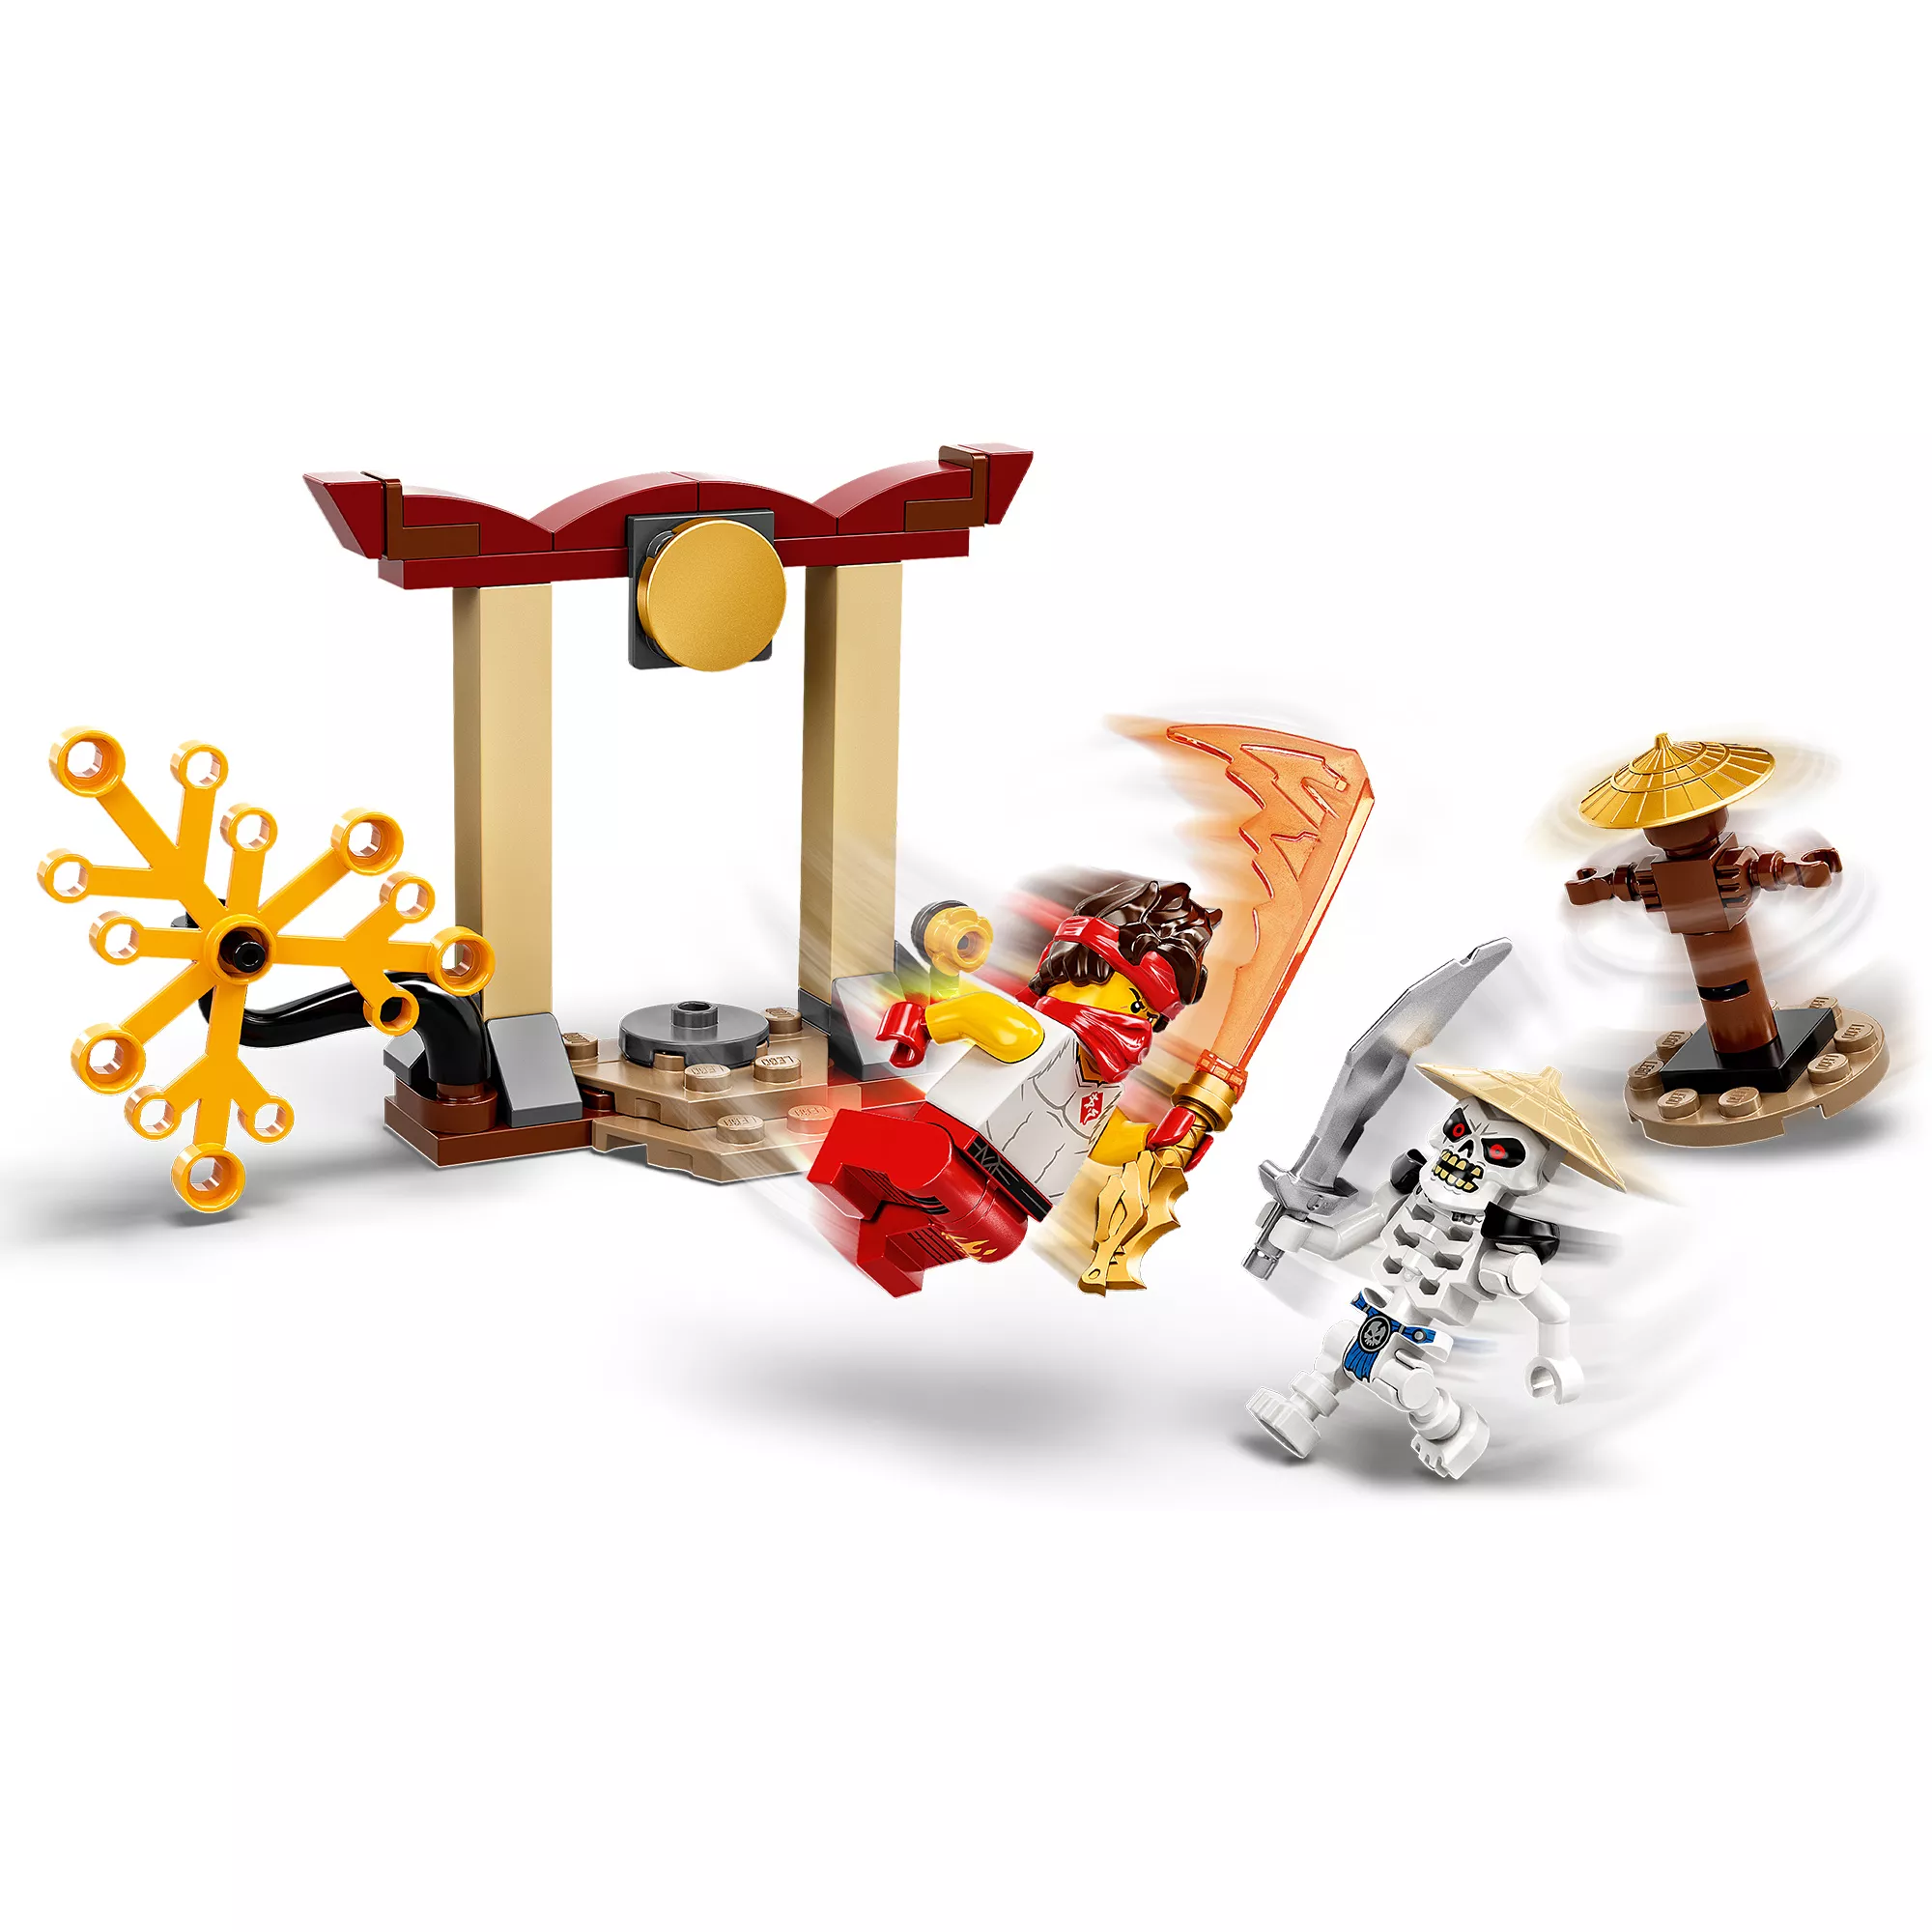 LEGO NINJAGO Battle Set: Kai vs. Skulkin